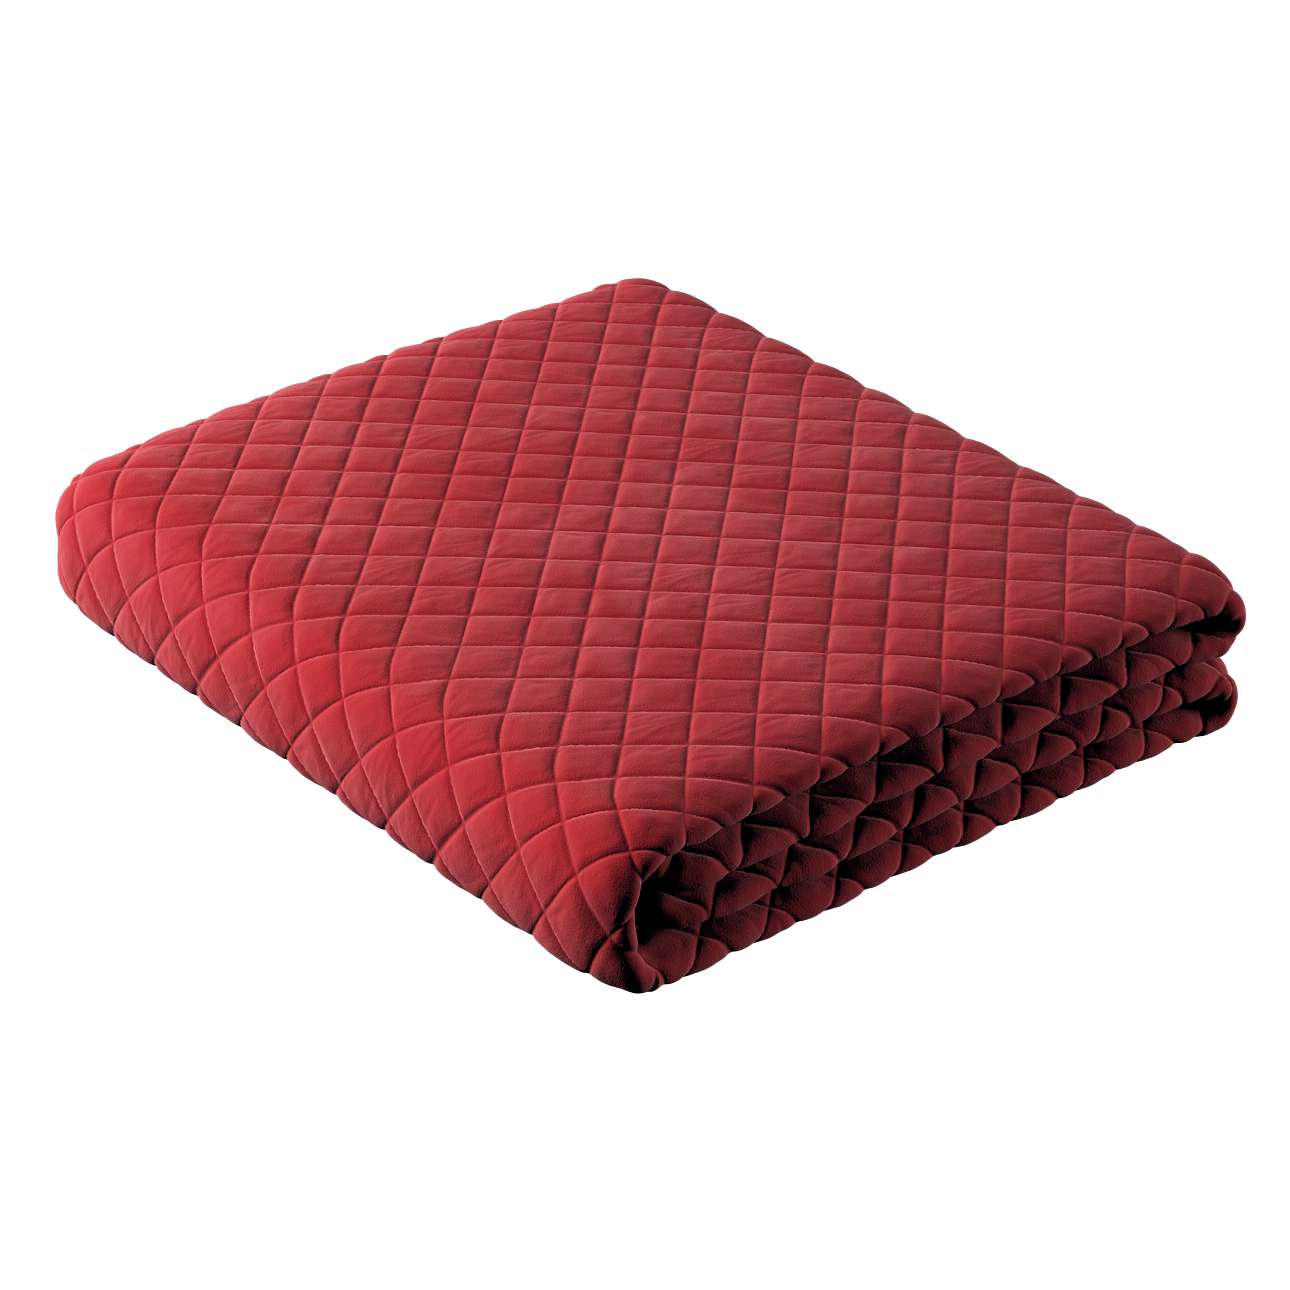 Posh Velvet Bedspread - cherry red